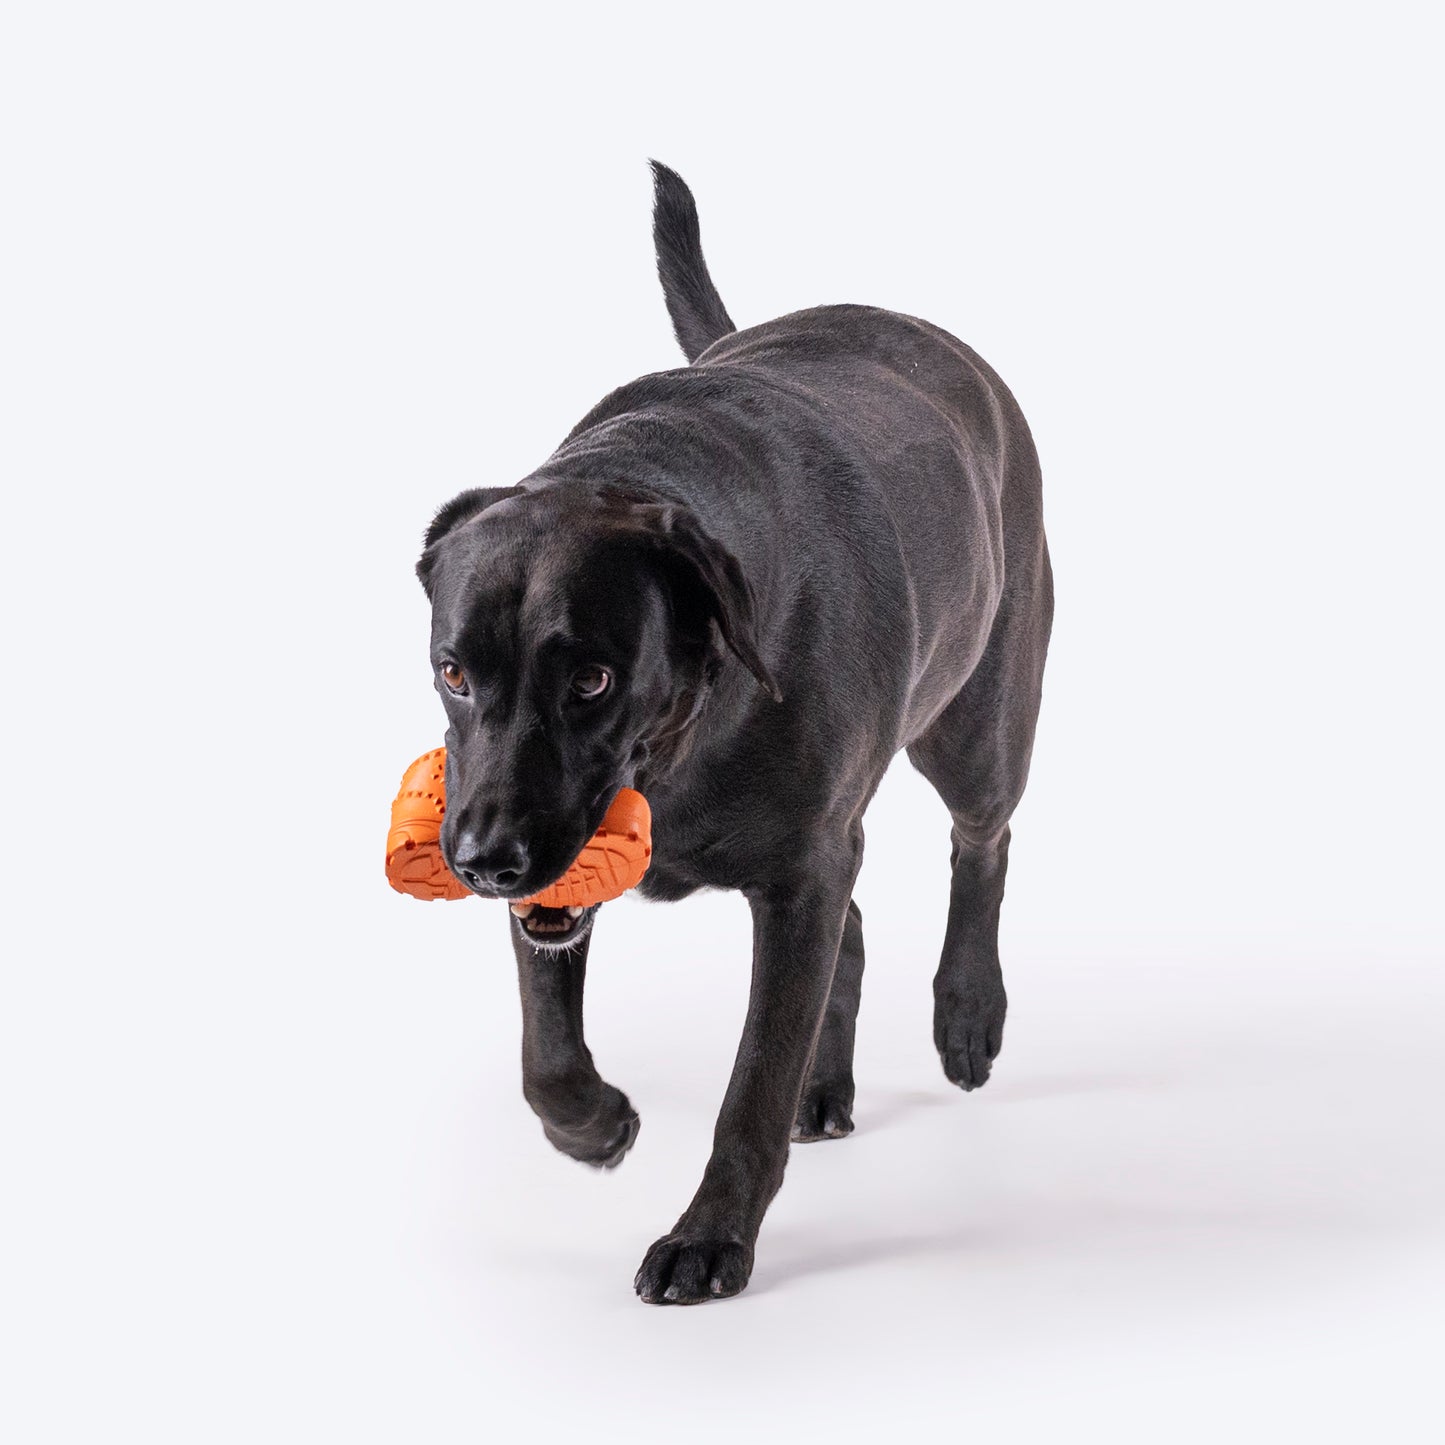 HUFT Squeaky Shoe Chew Toy For Dog - Orange